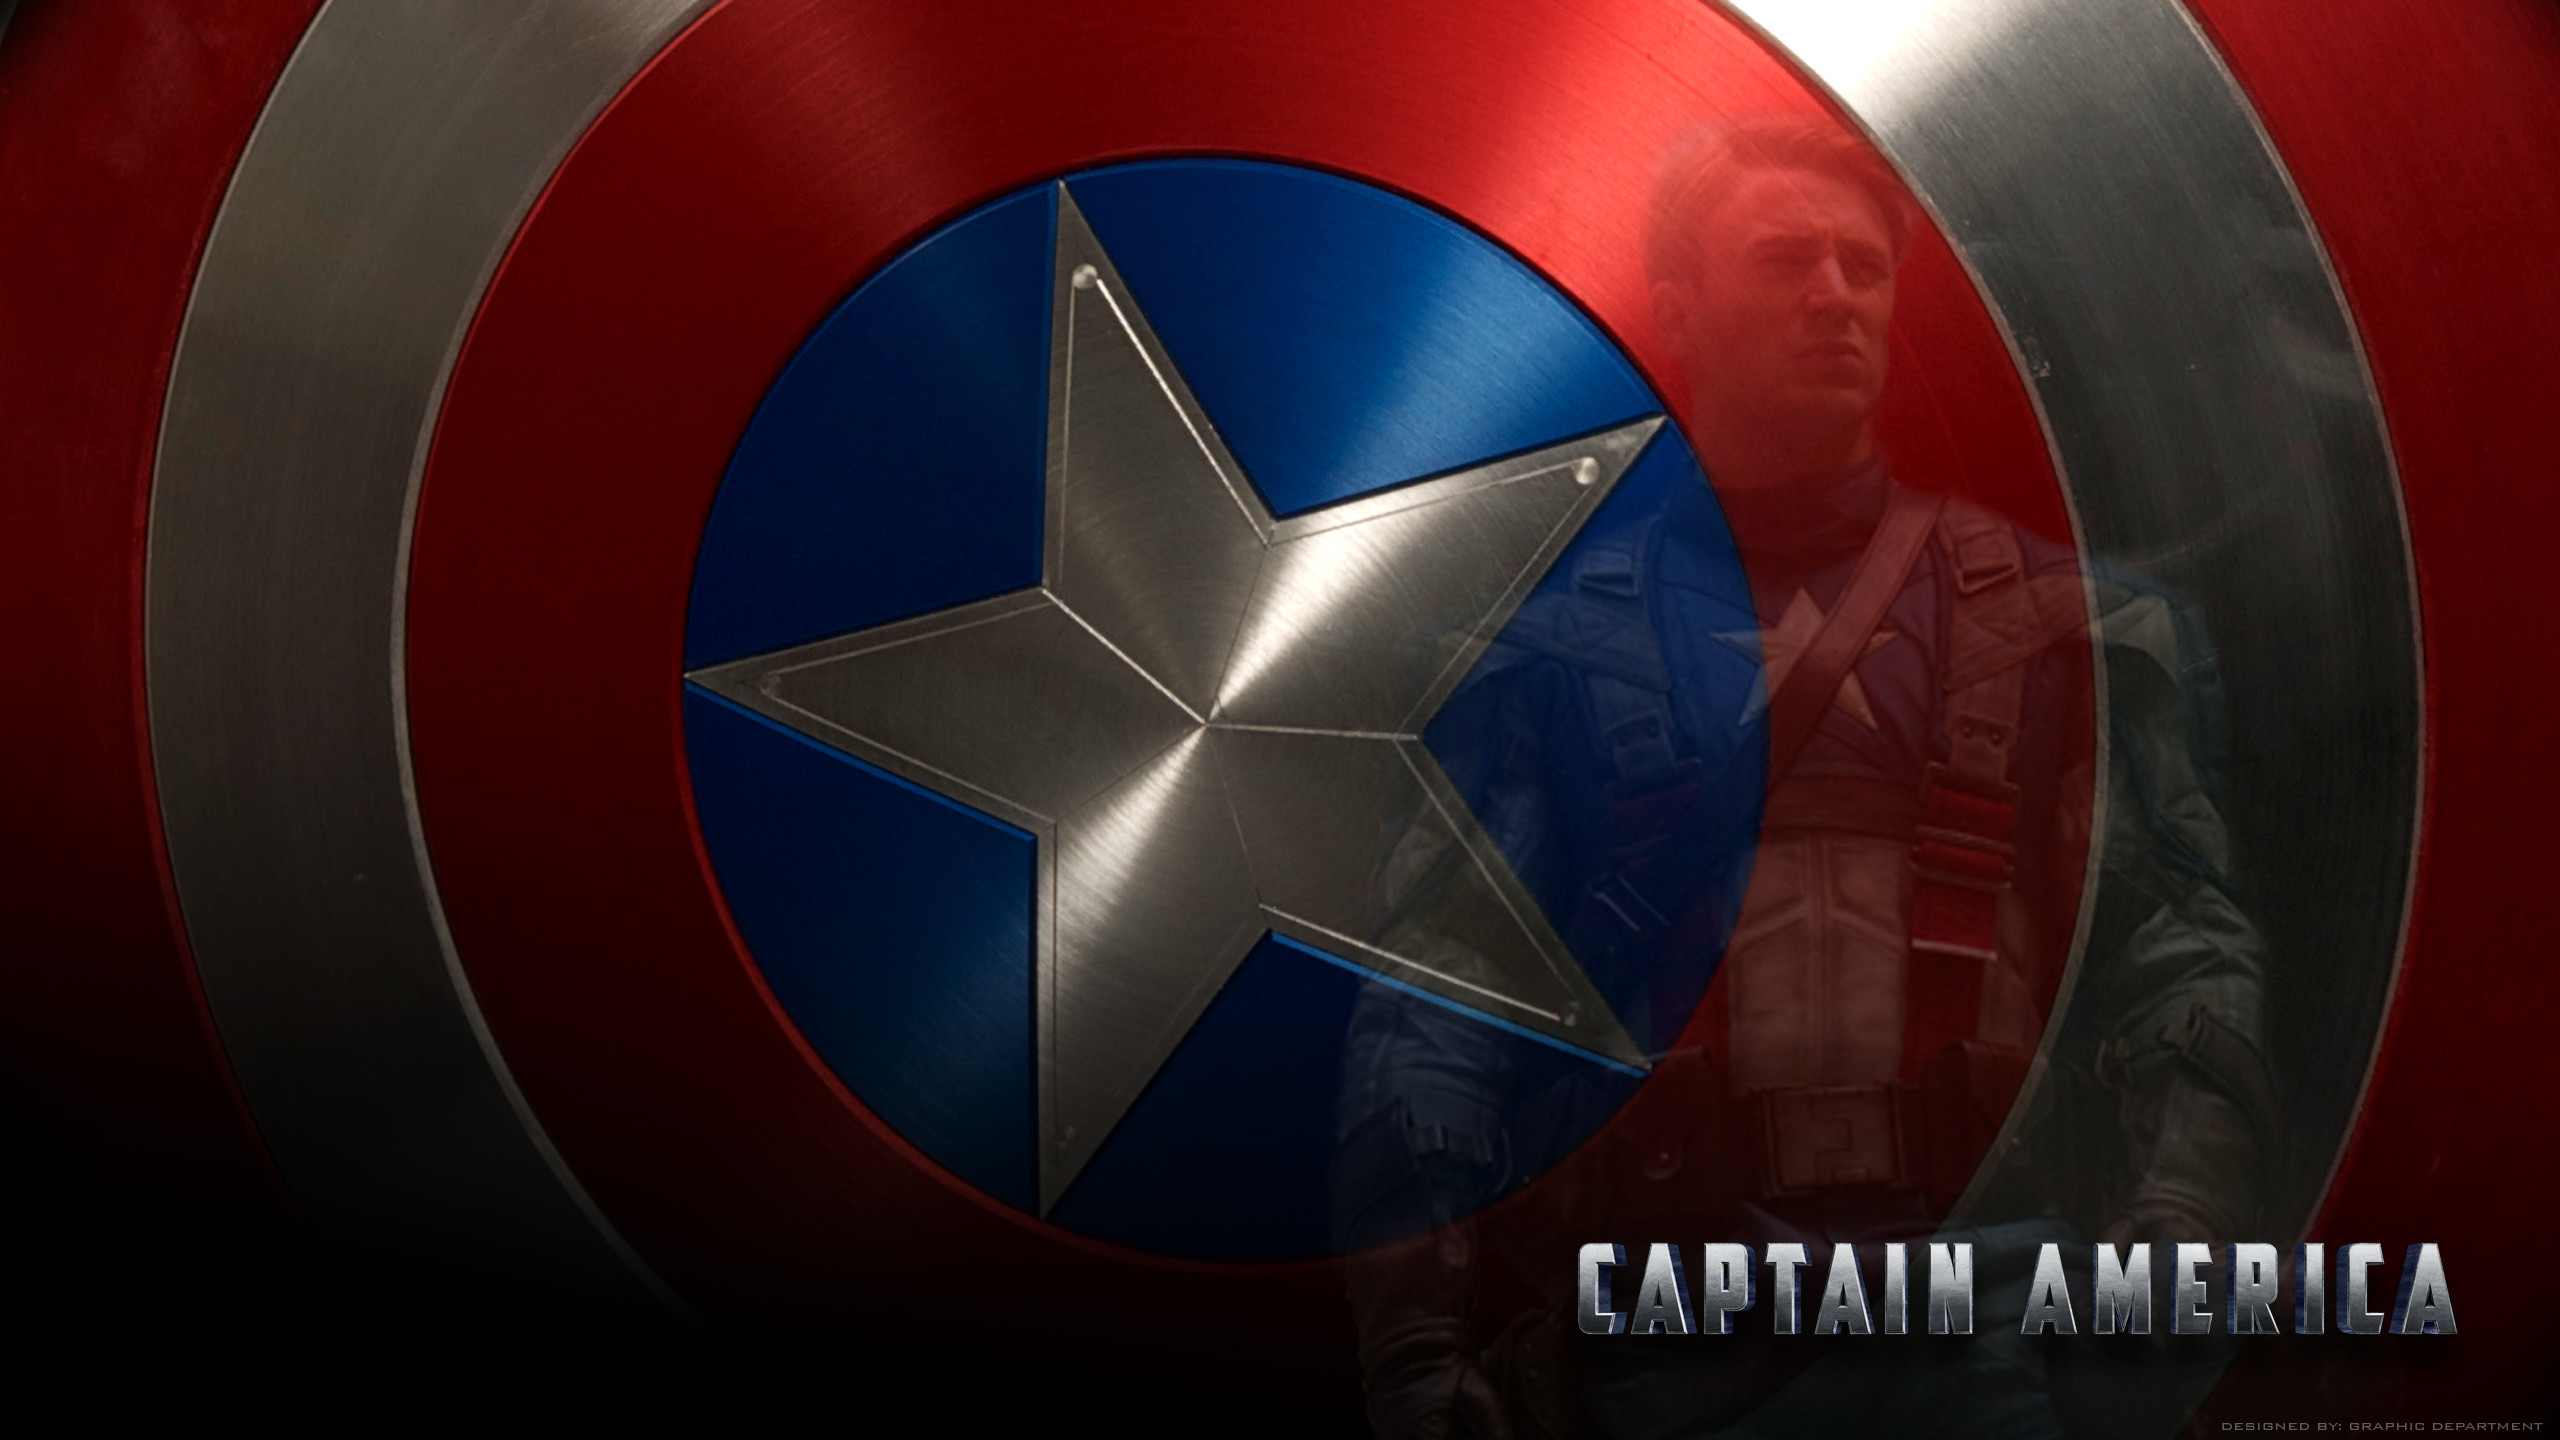 Captain America Shield Wallpaper by kaizx2222 on DeviantArt